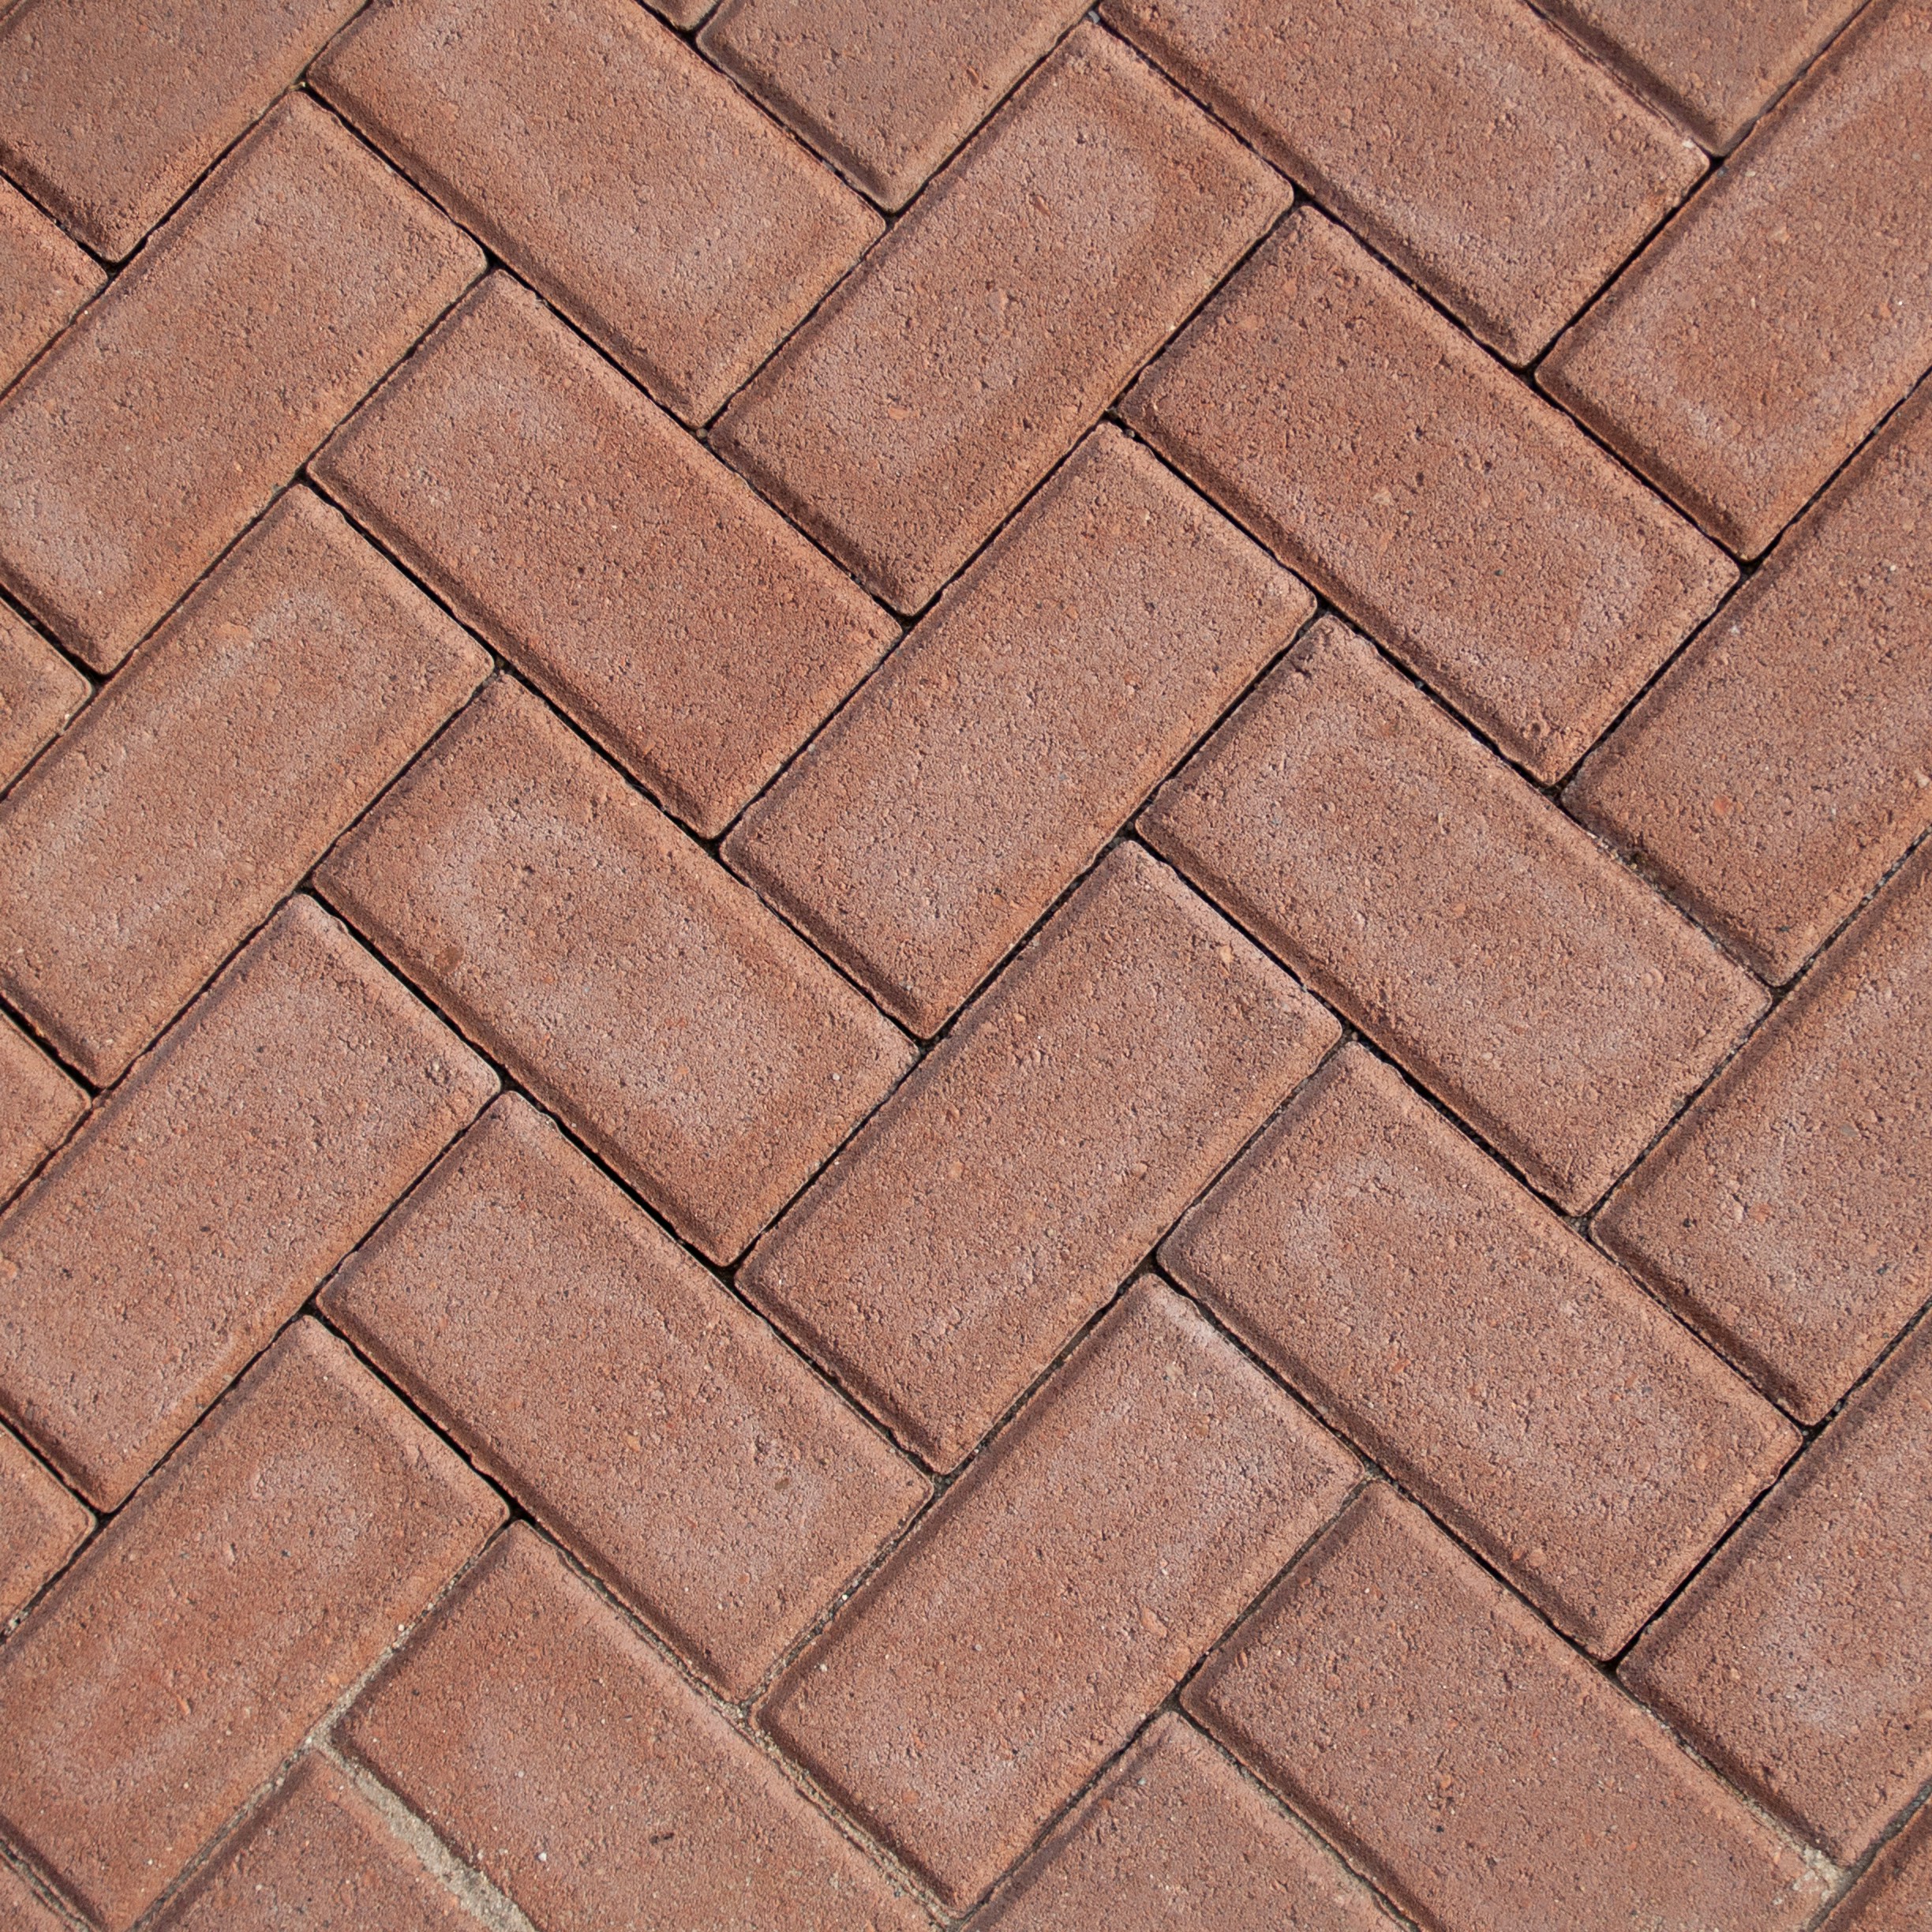 a close up of a red brick sidewalk